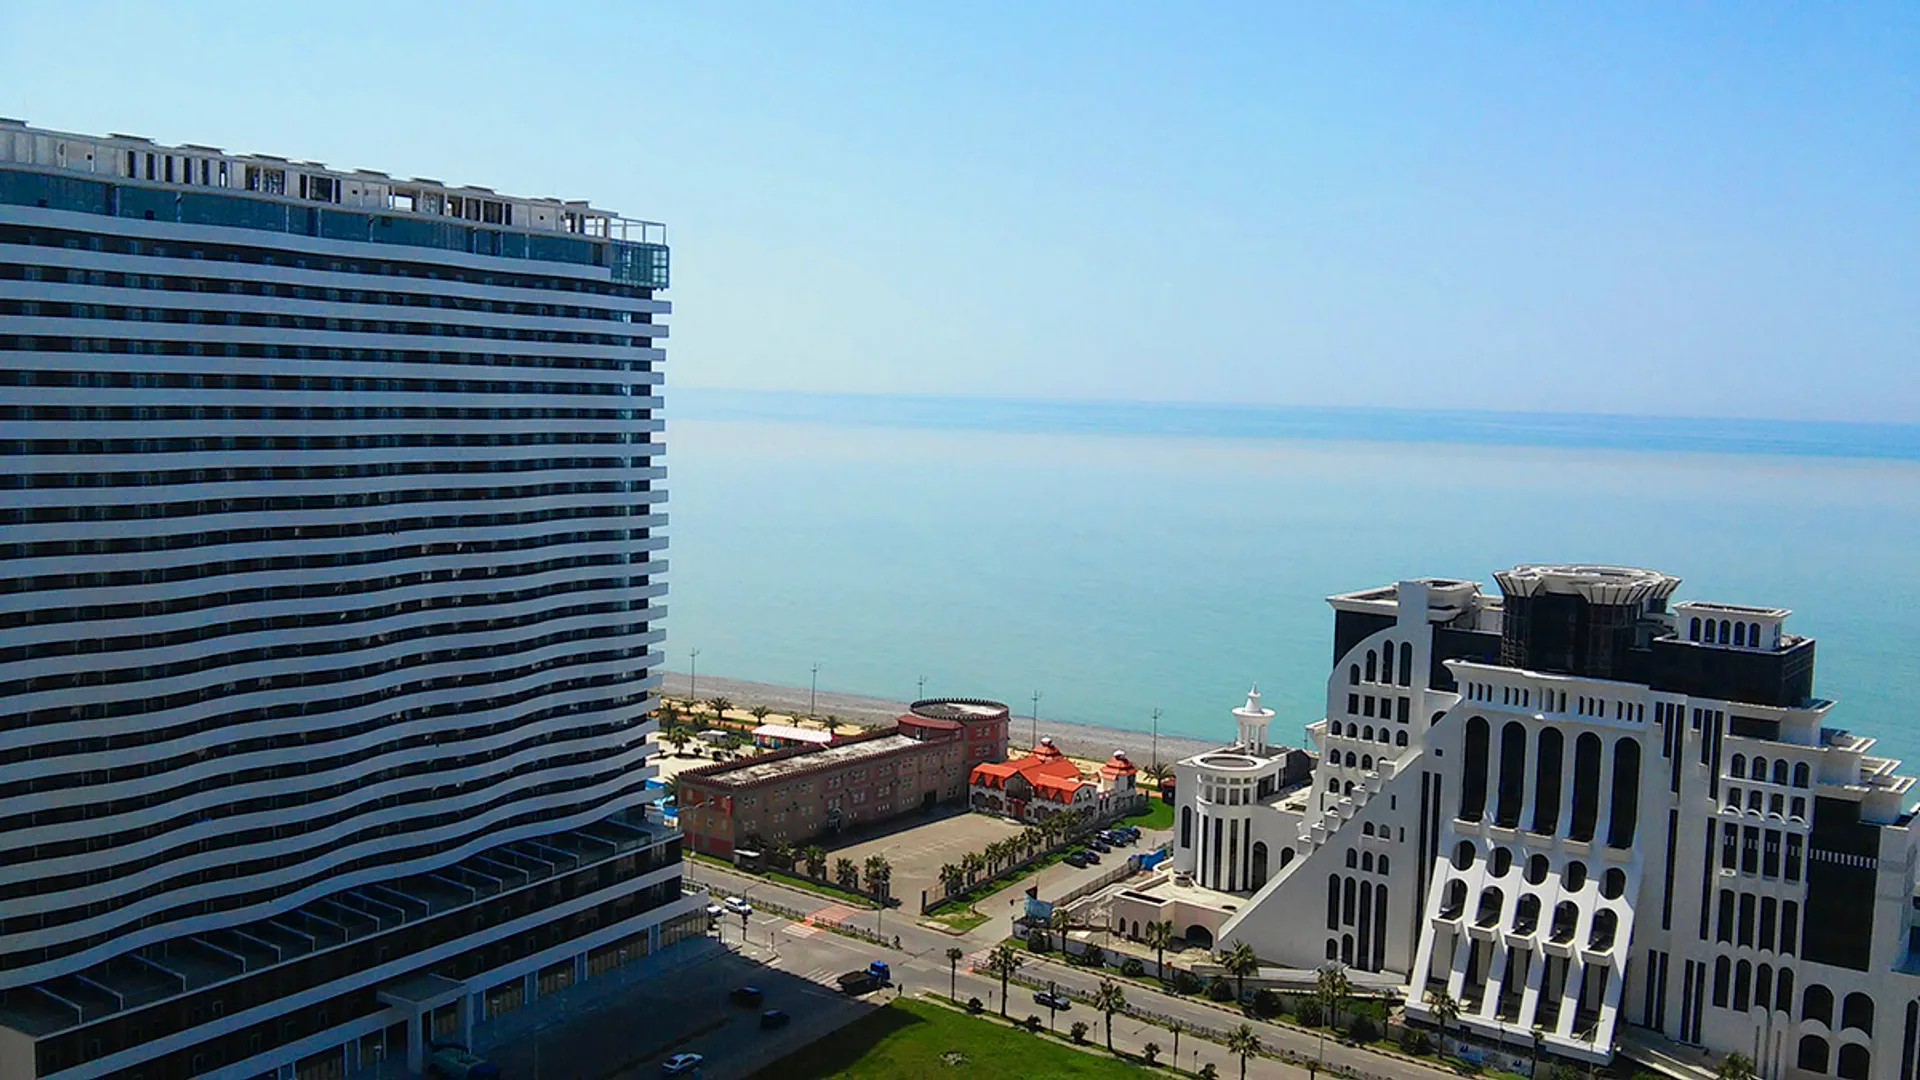 Orbi Residence, Аквапарк, пляж и отель жены президента Азербайджана "Сады Семирамиды".